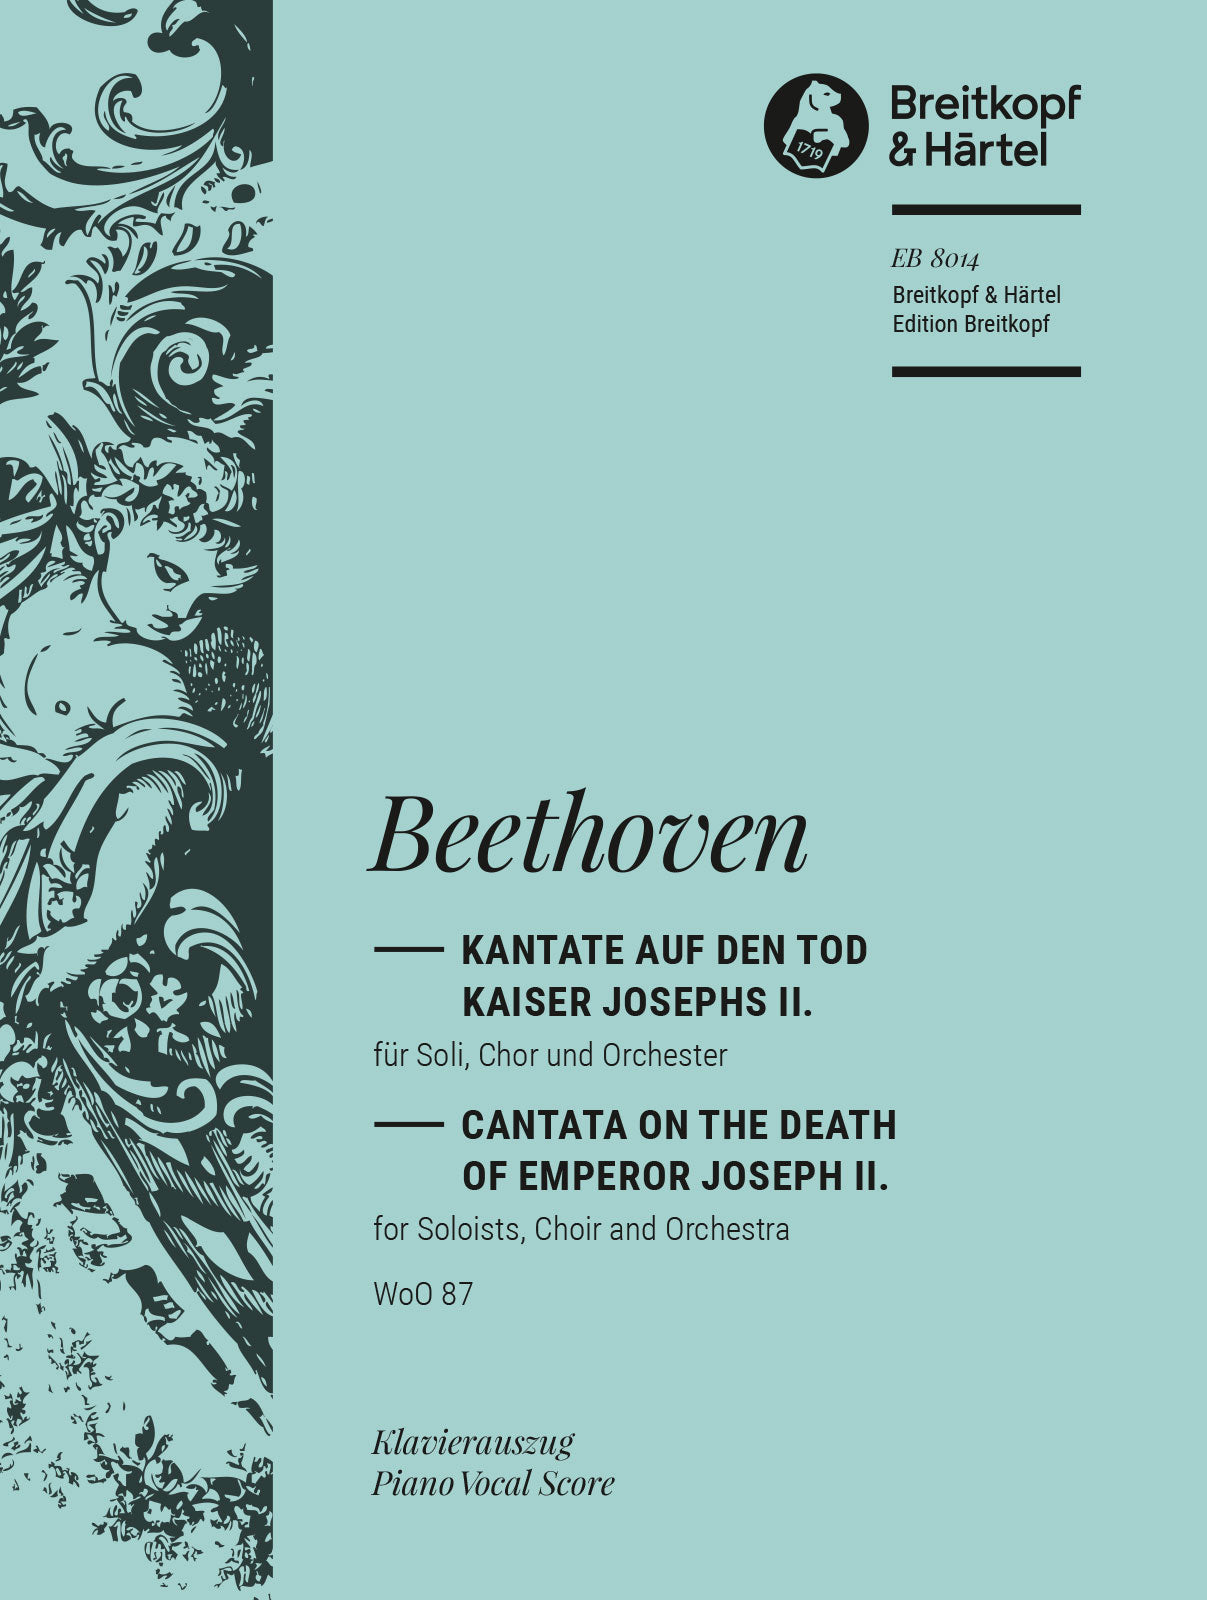 Beethoven: Kantate auf den Tod Kaiser Josephs II, WoO 87